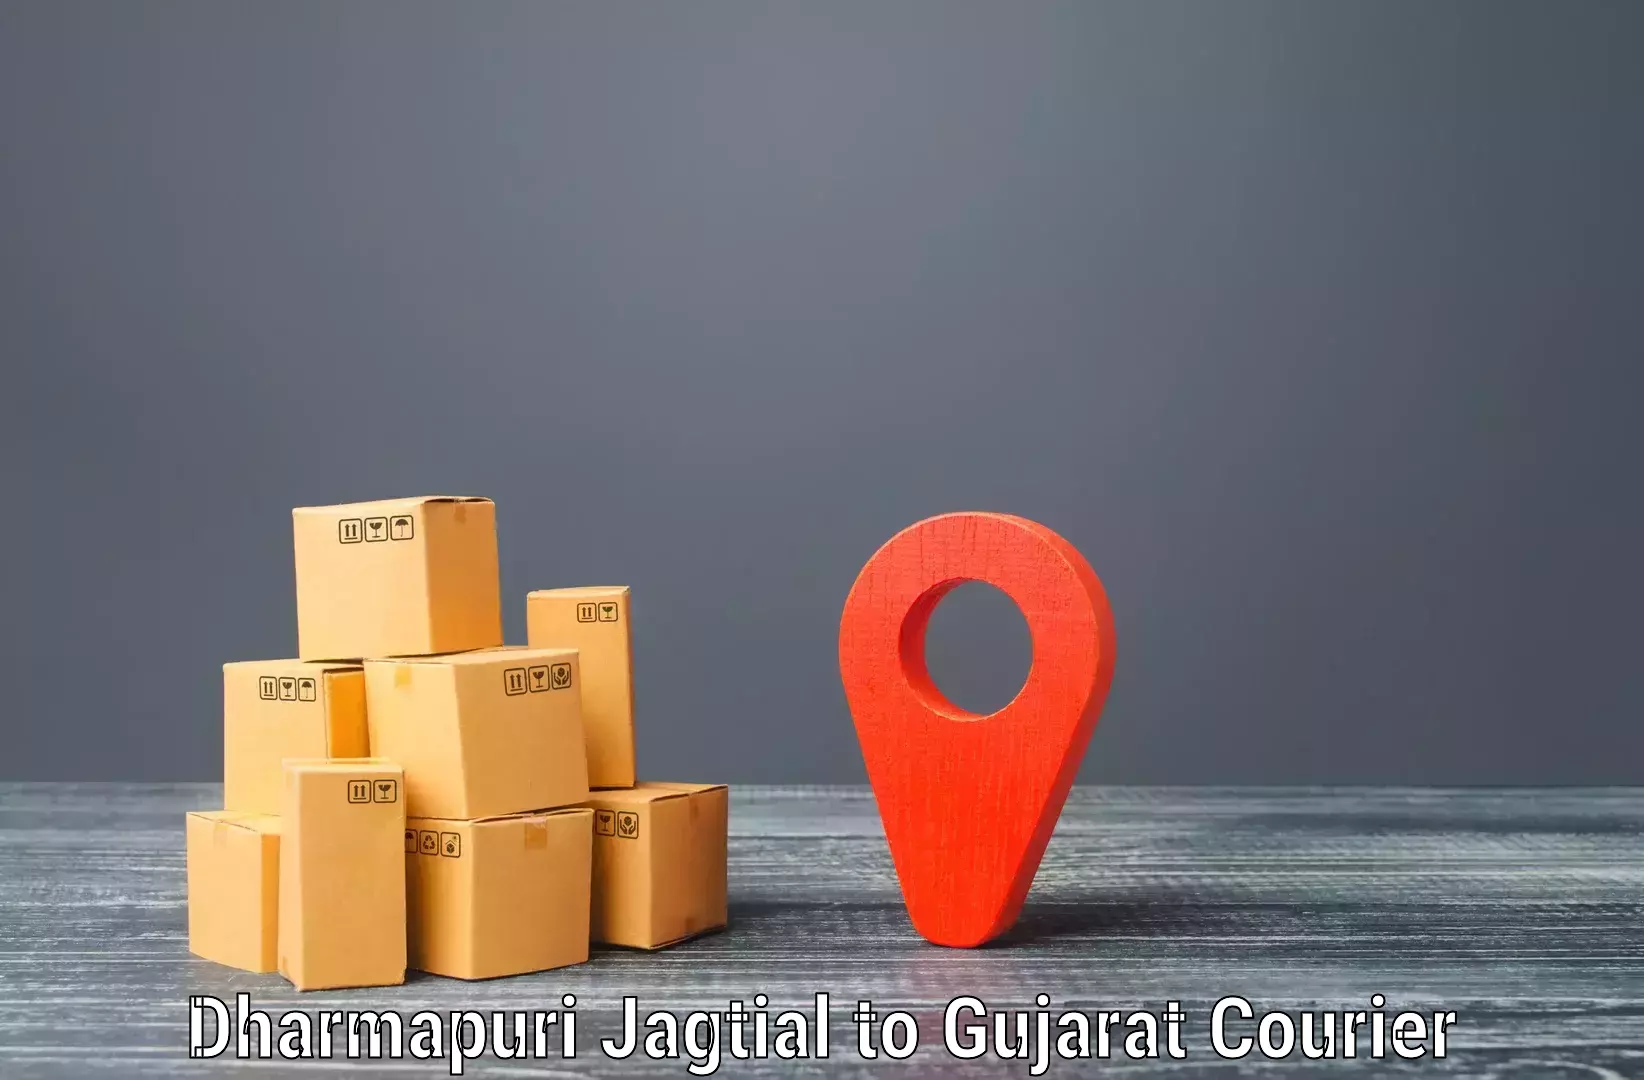 Multi-city courier Dharmapuri Jagtial to Hansot